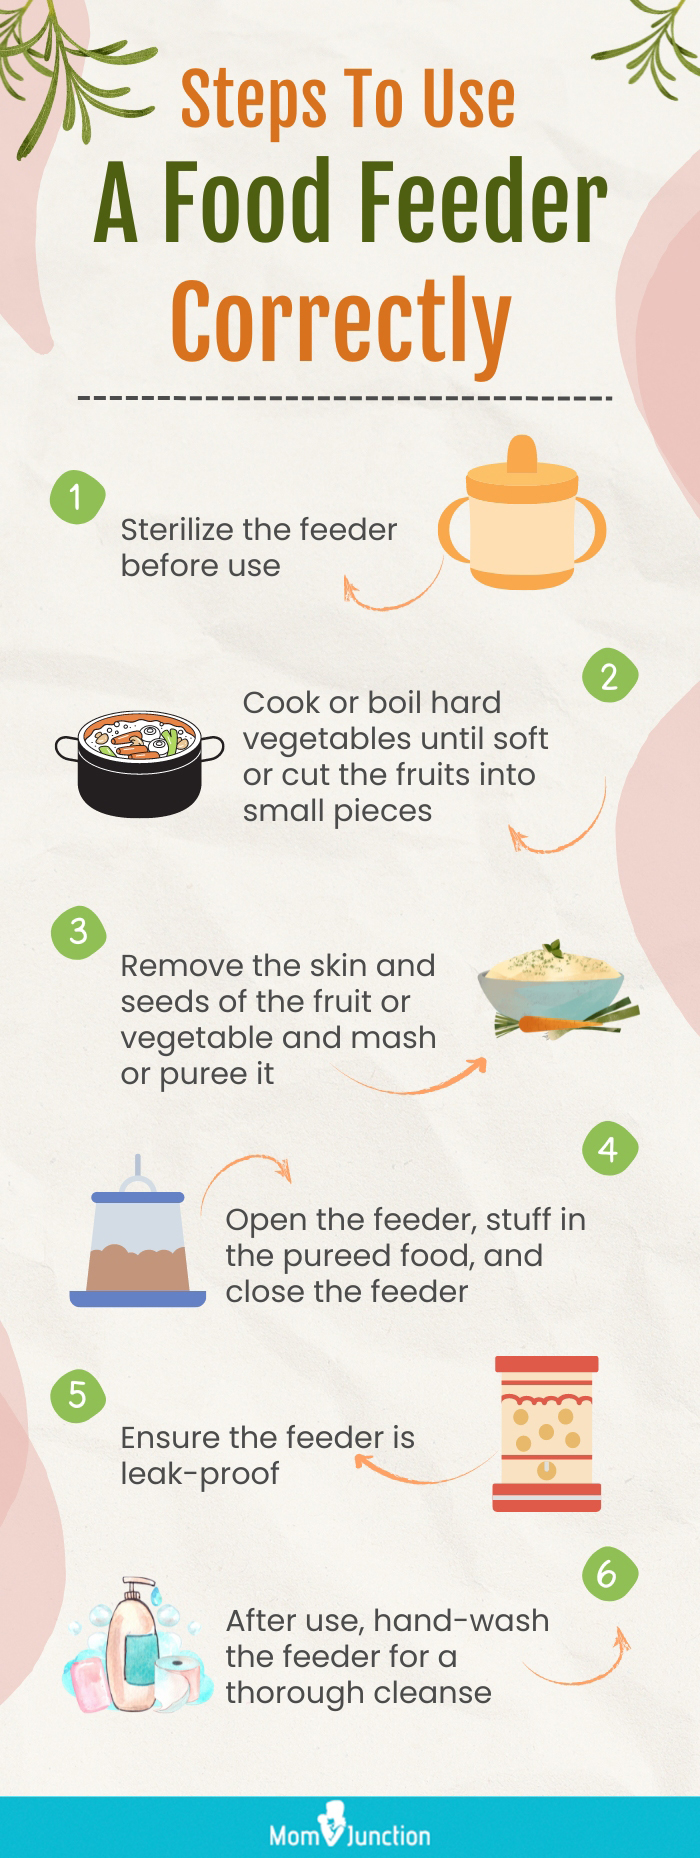 Steps To Use A Food Feeder Correctly